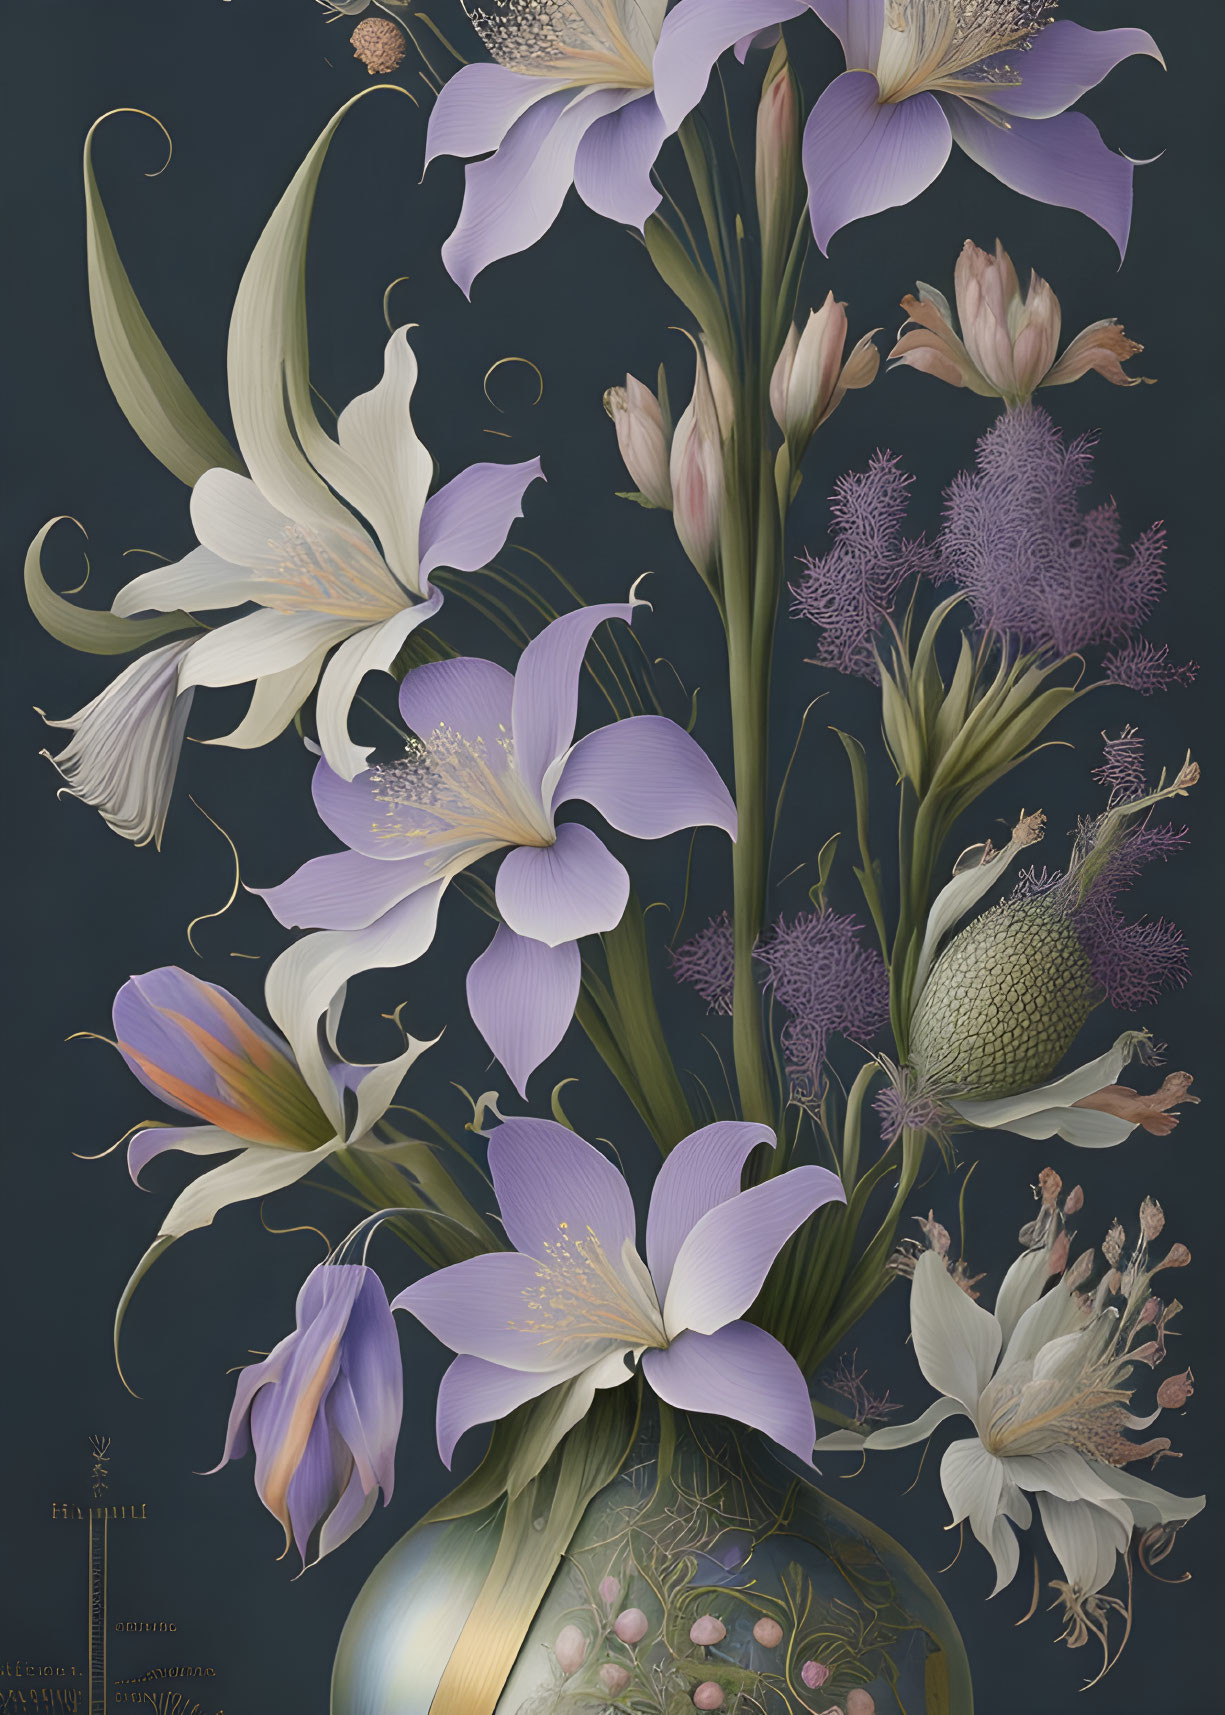 Botanical illustration: White and purple flowers in golden vase on dark background